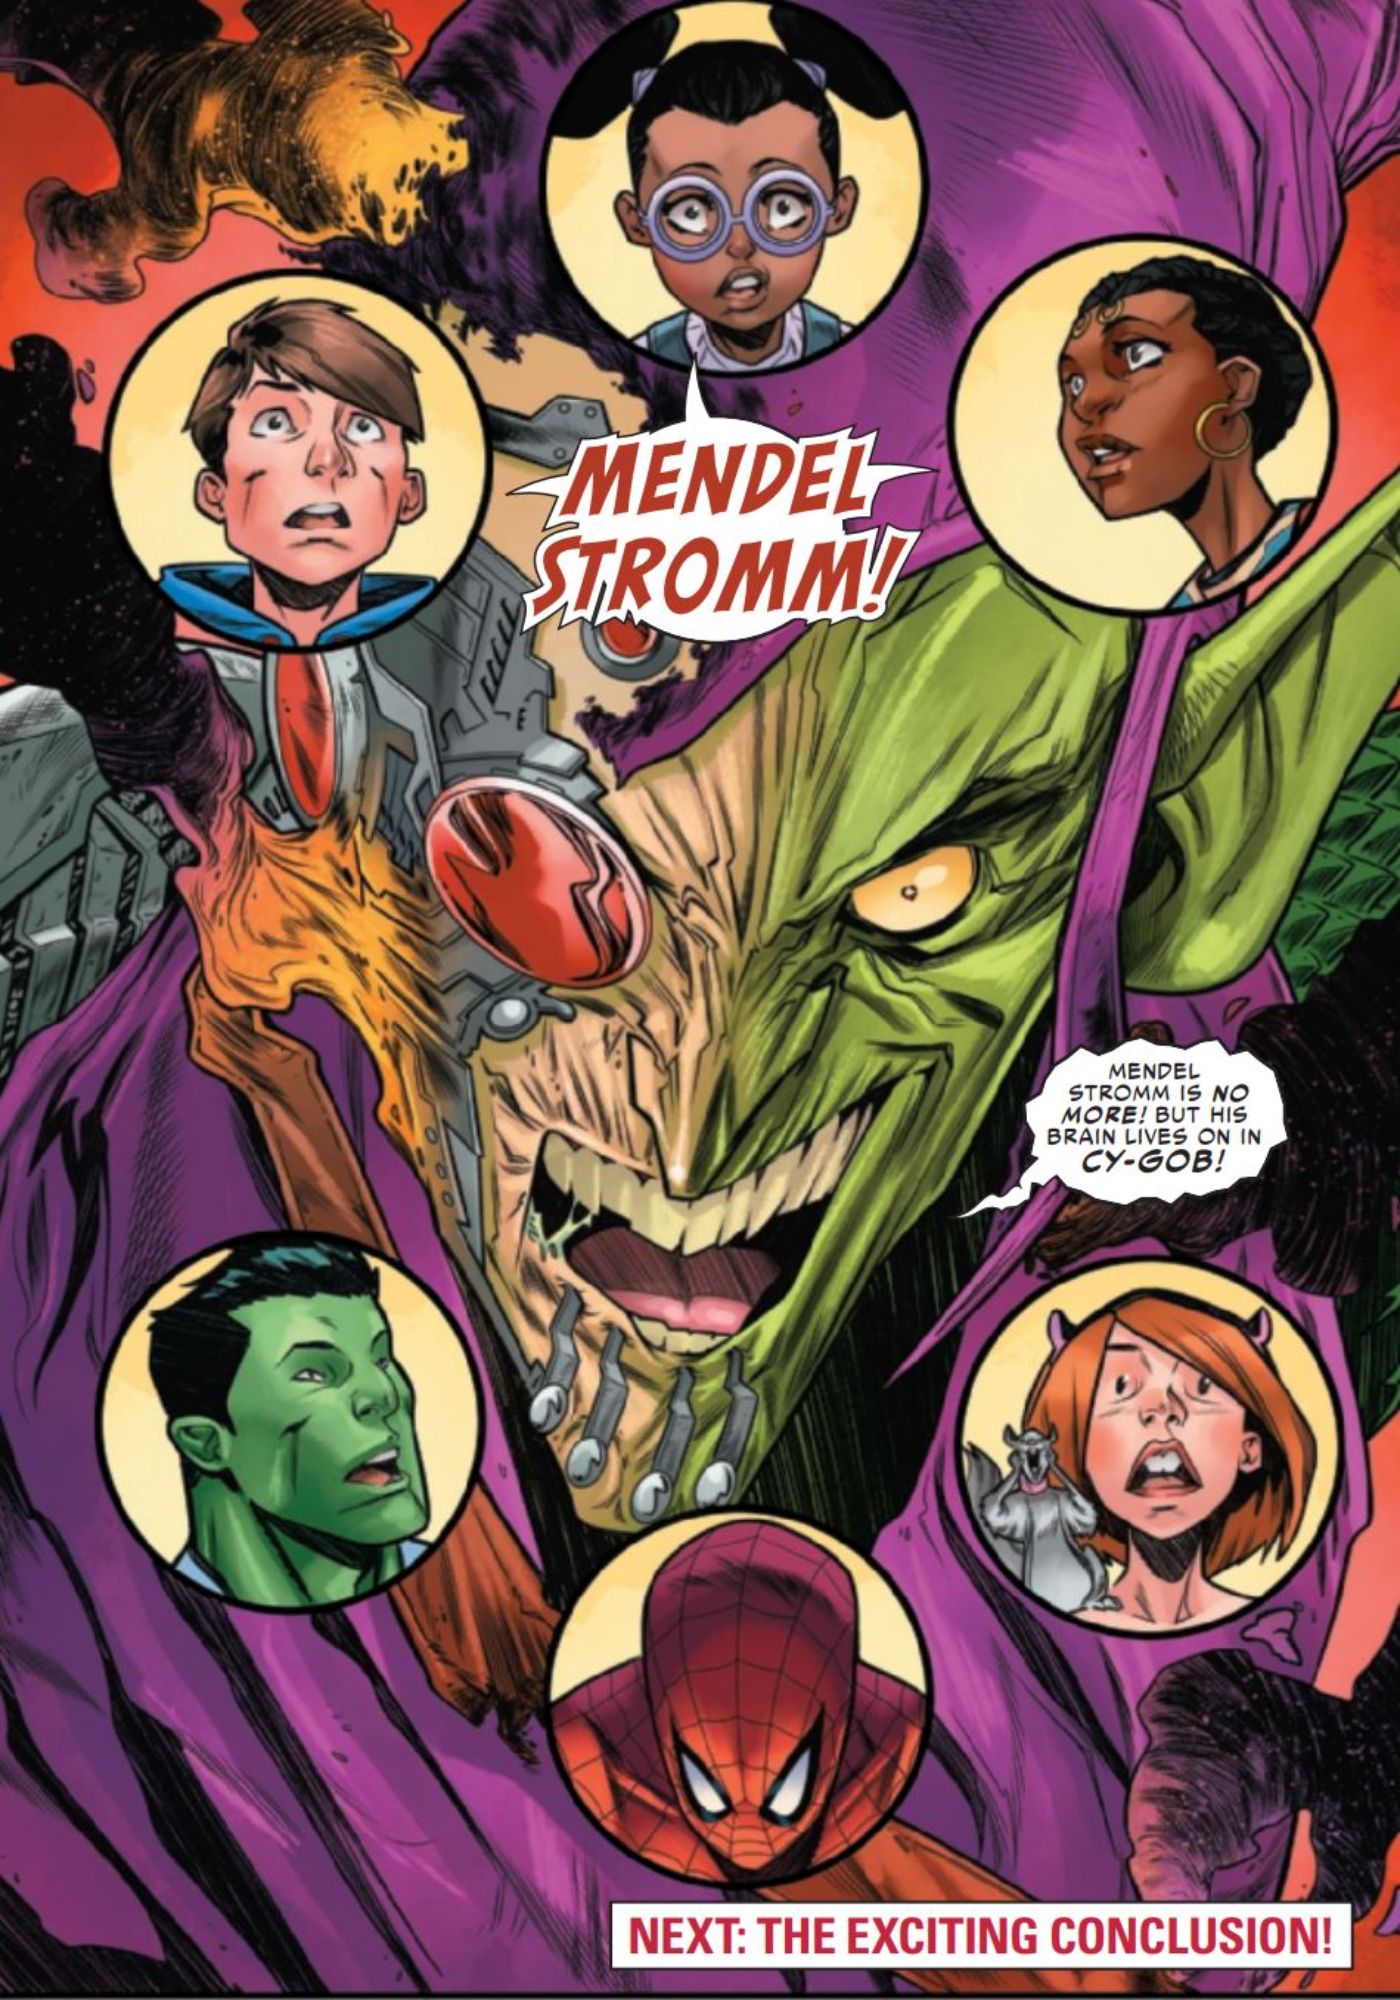 New Green Goblin Marvel Comics (2)